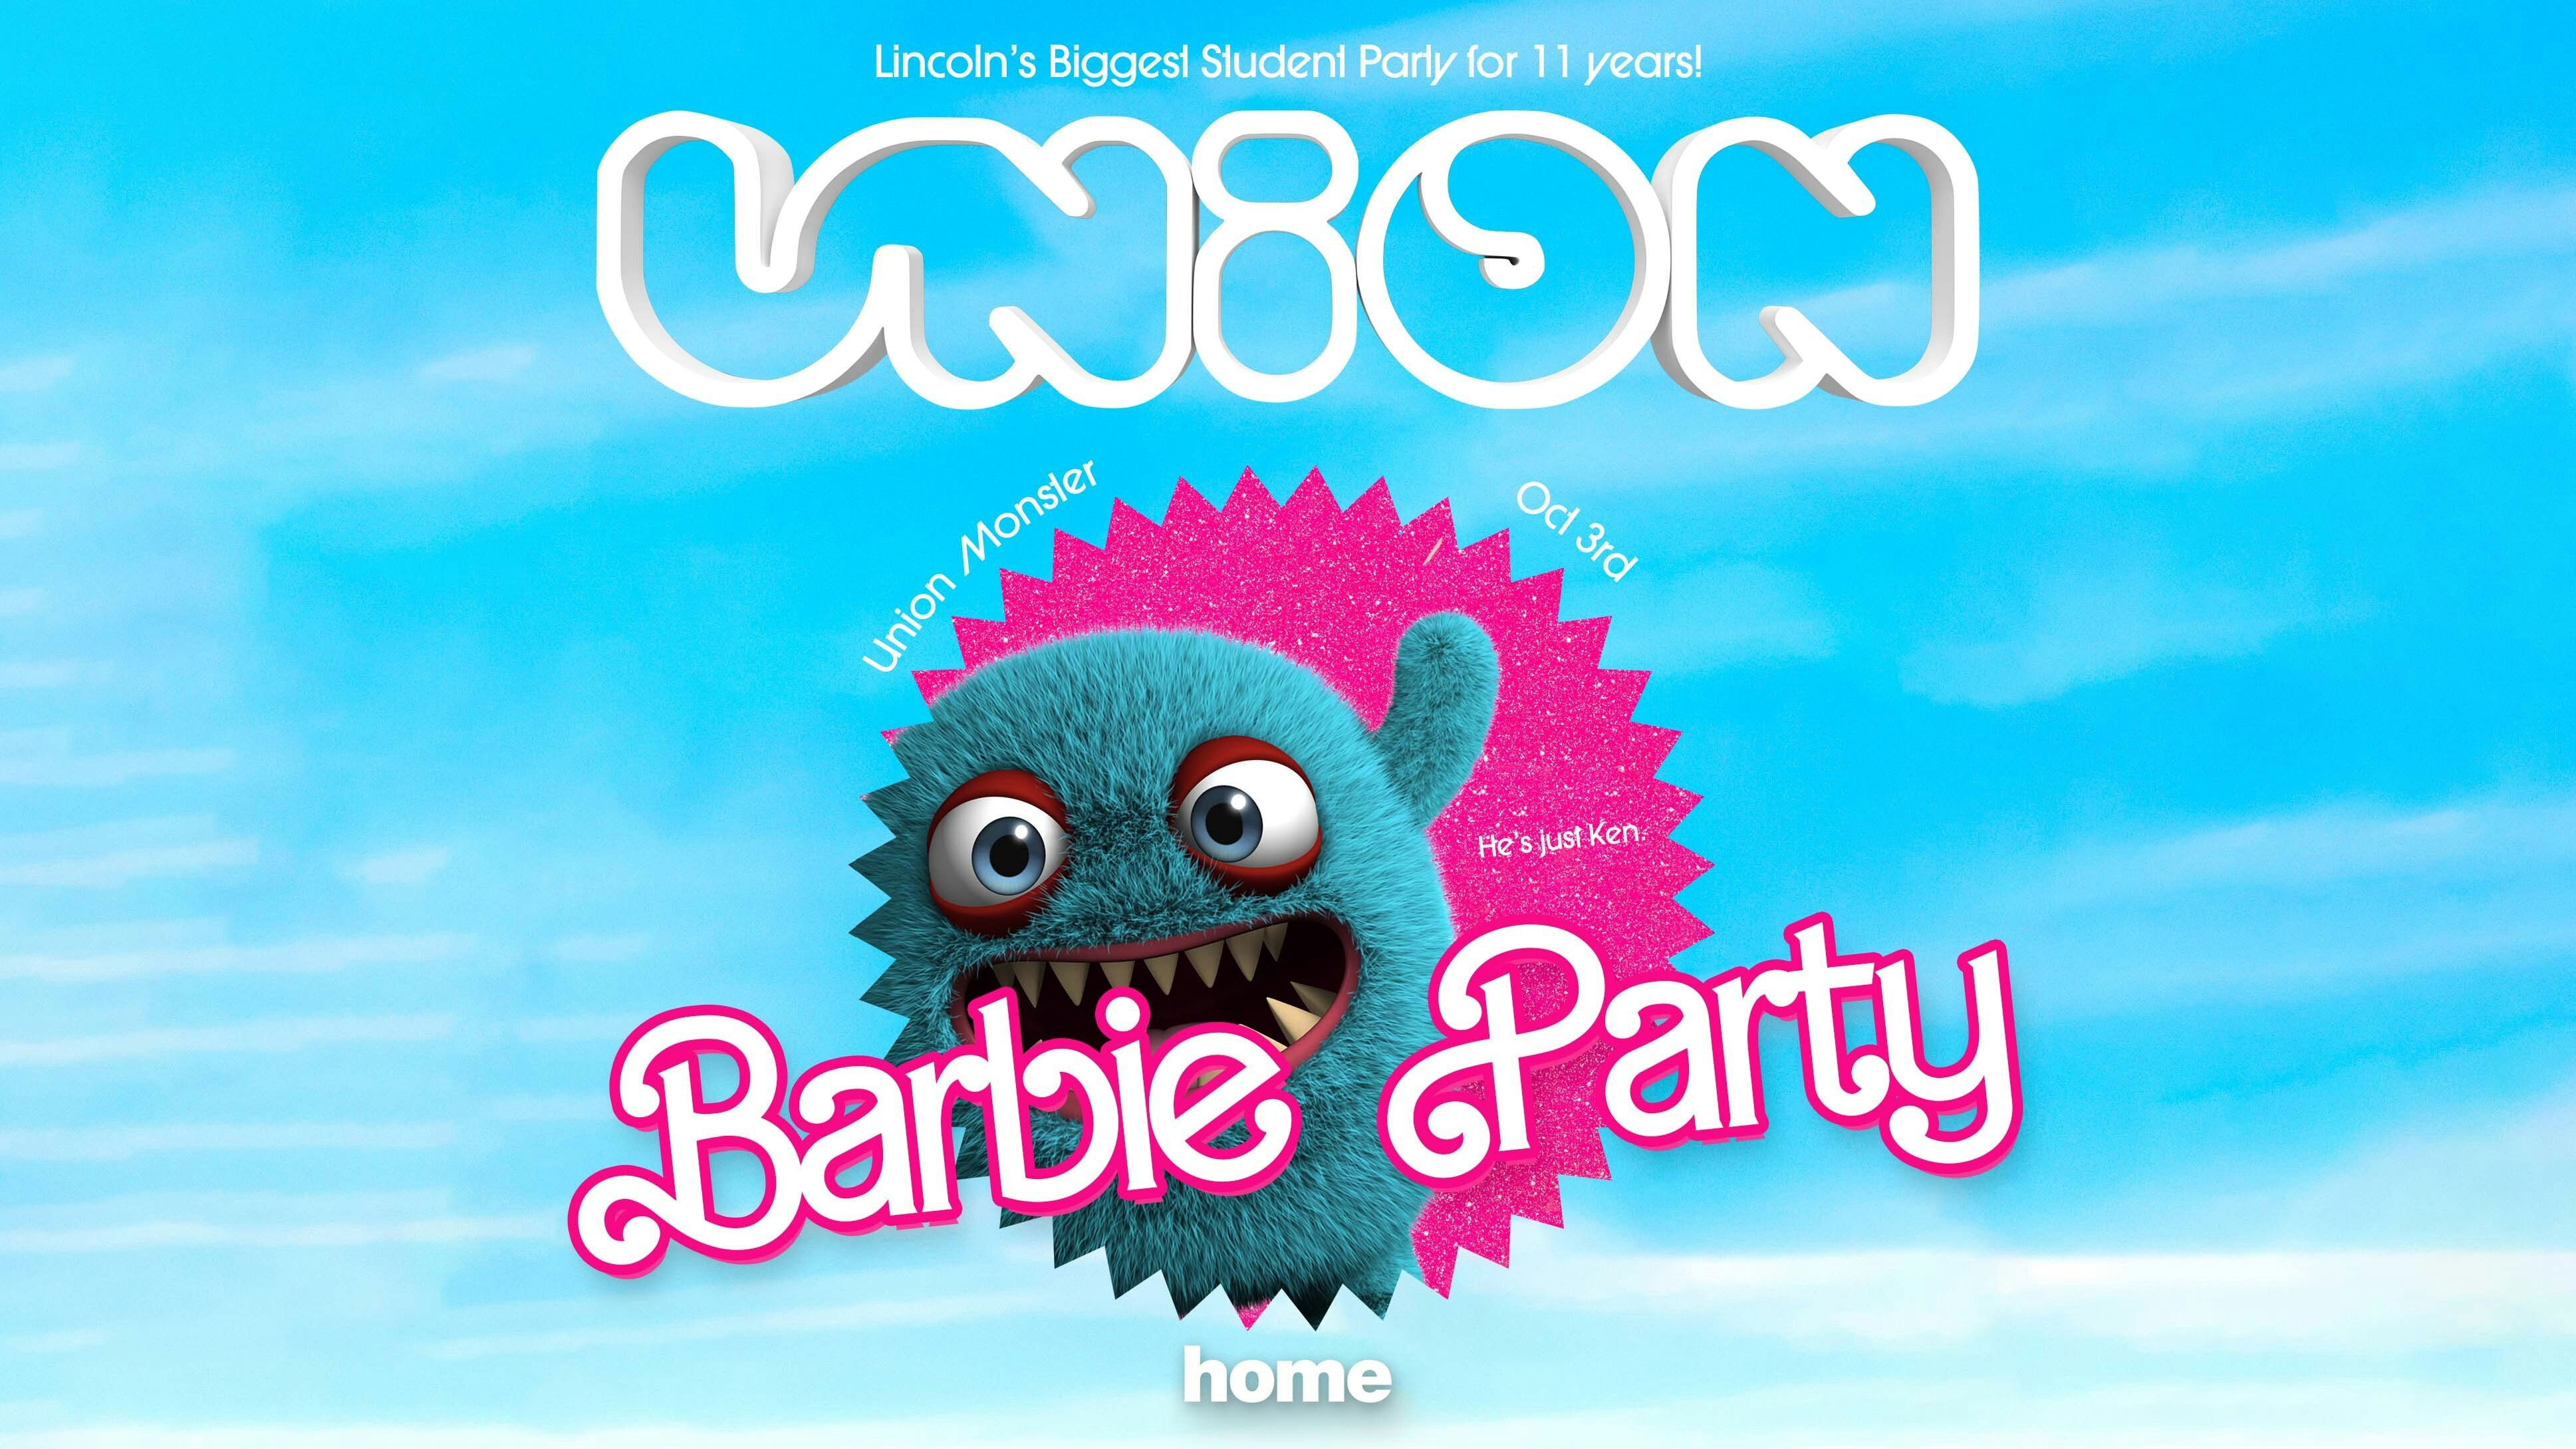 UNION TUESDAY’S 🌸 BARBIE PARTY 🌸 HOME NIGHTCLUB